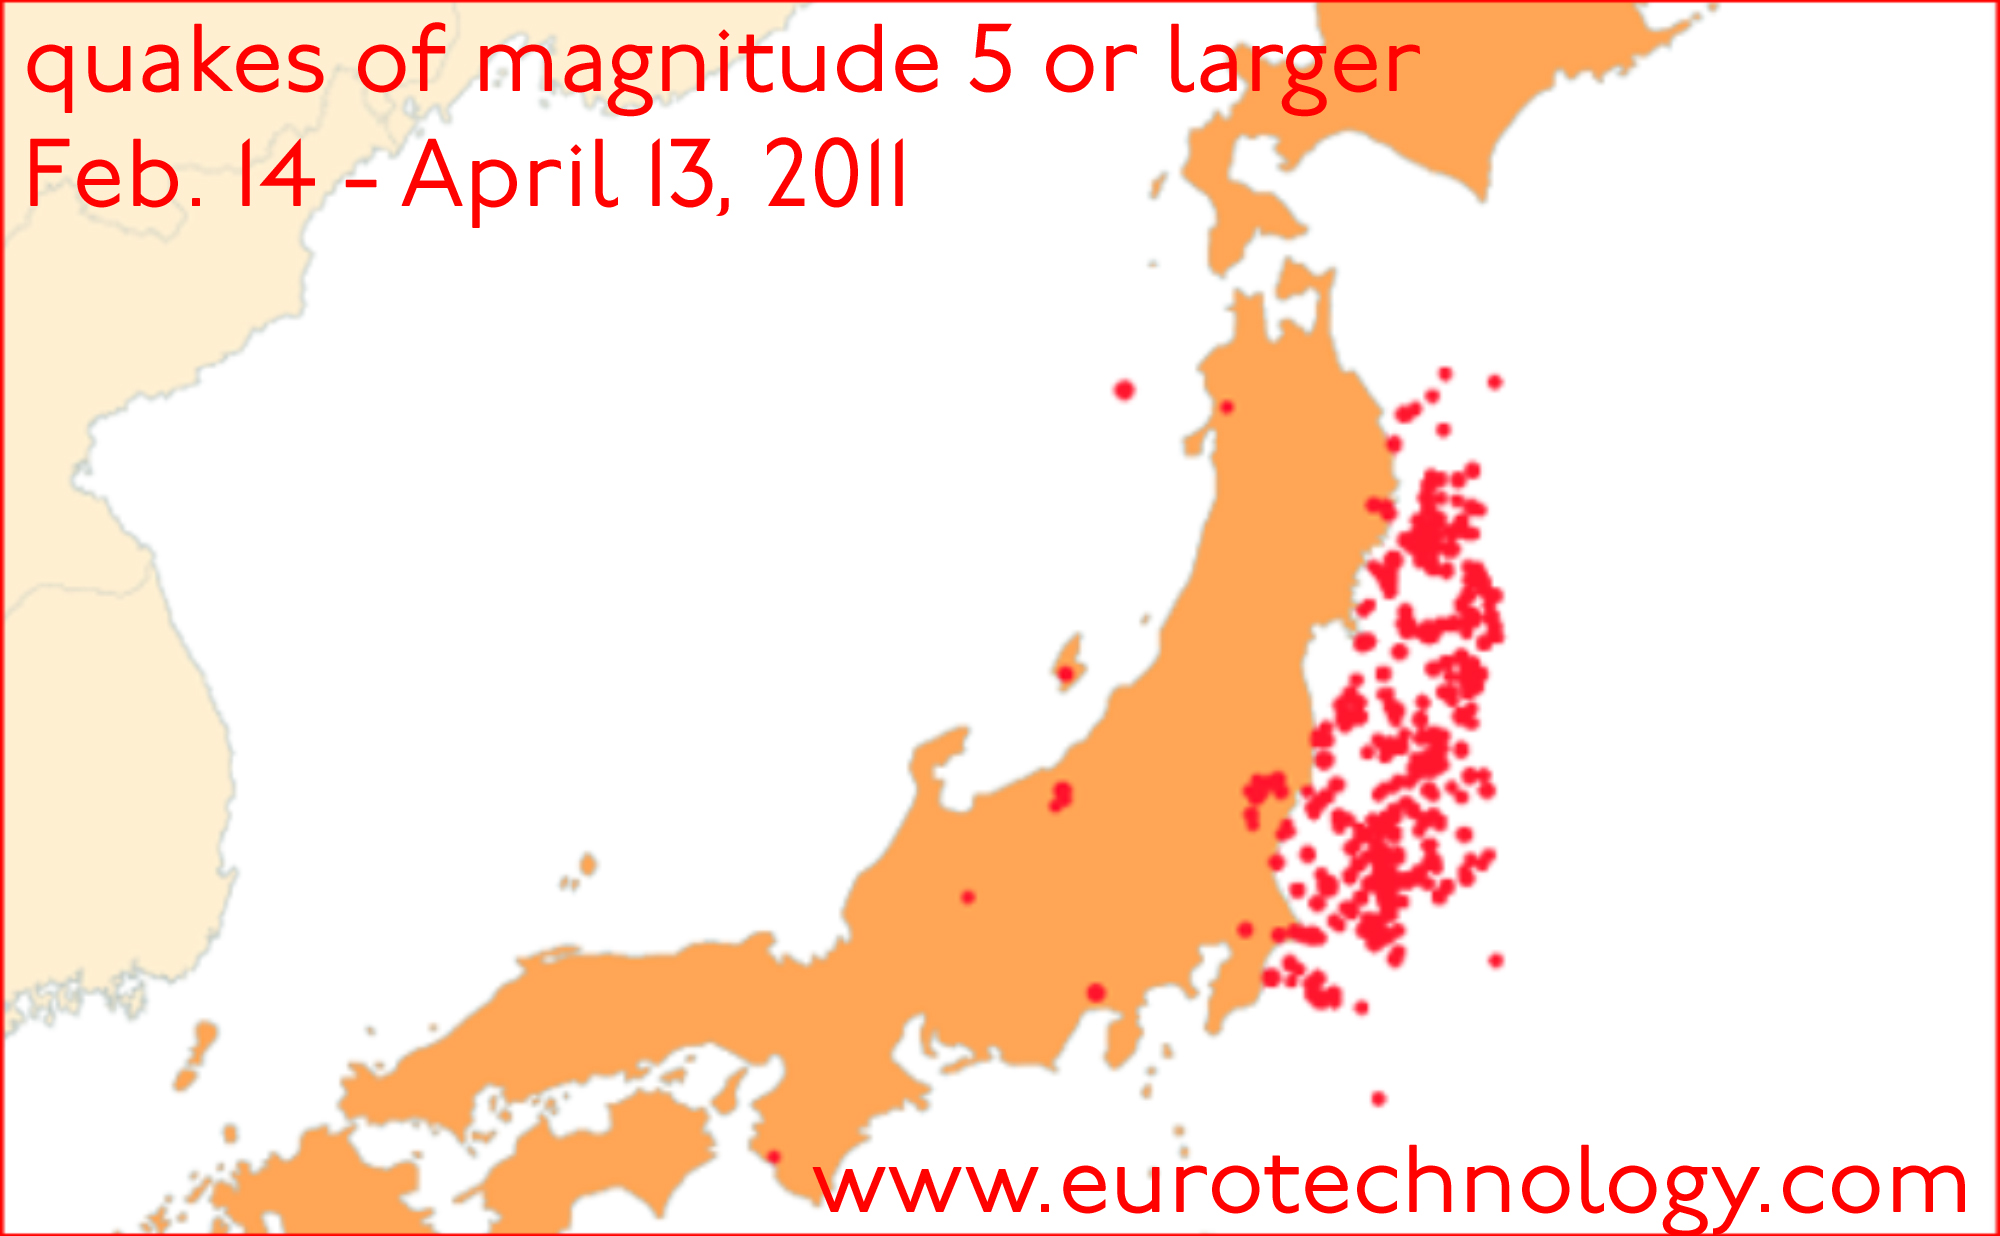 Tohoku disaster Friday March 11, 2011 at 14:46:24 – 7 years ago